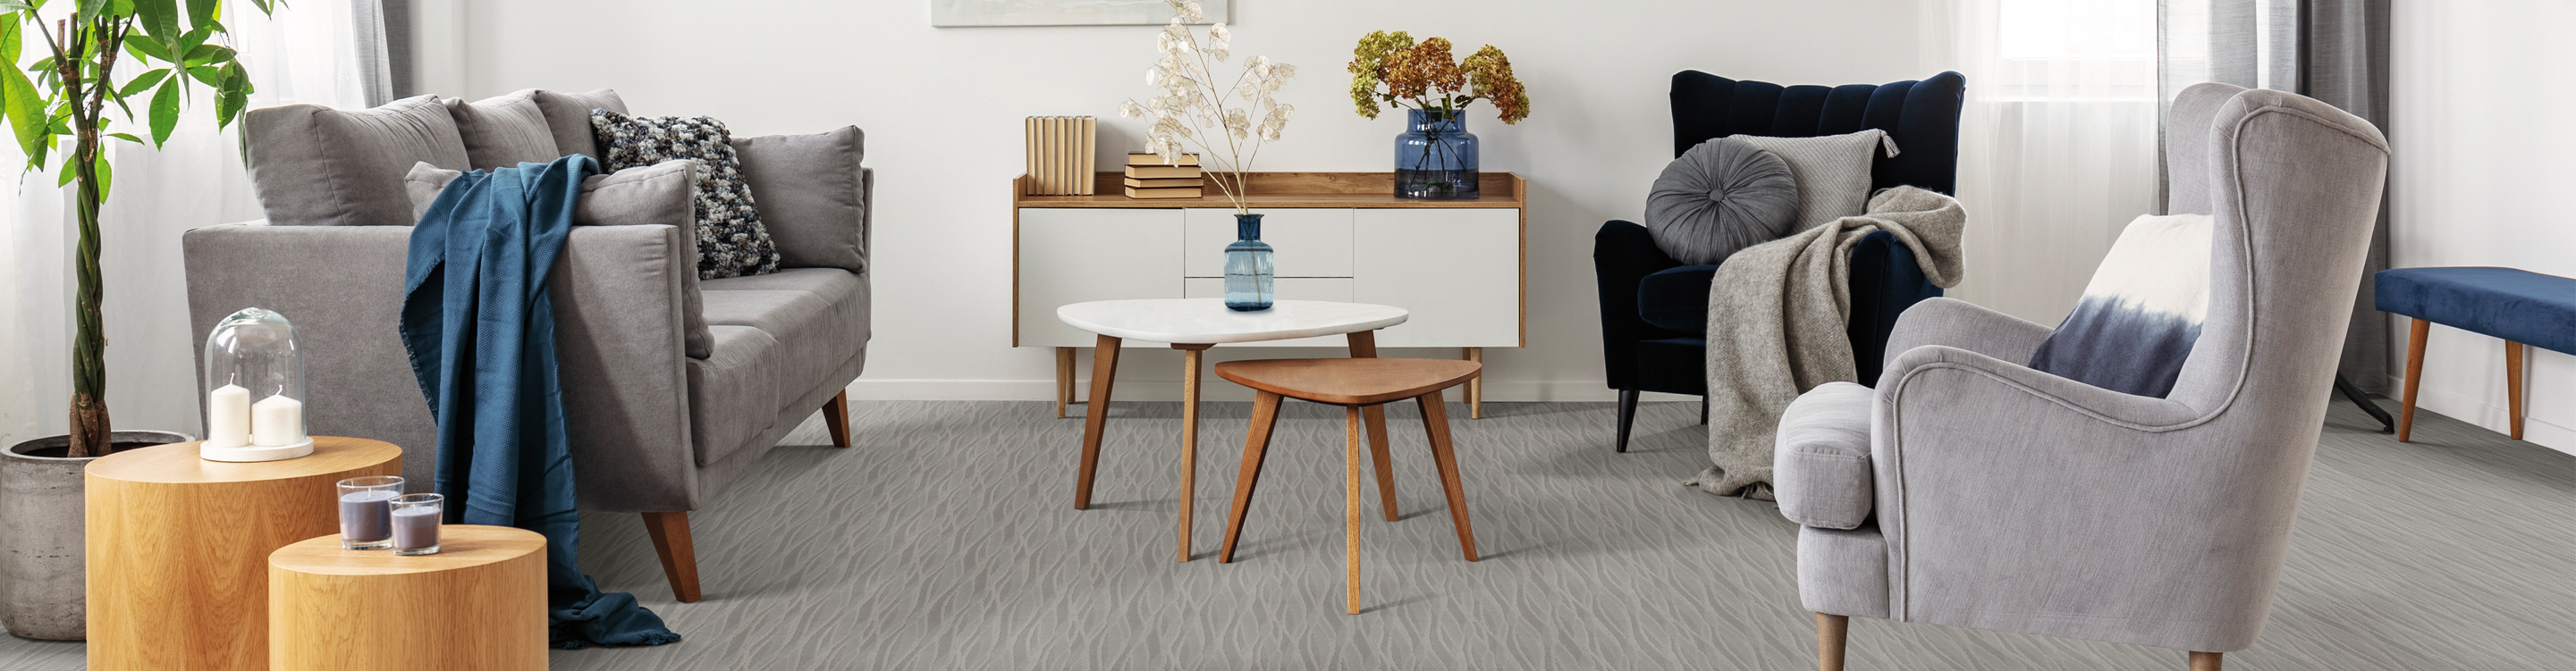 grey patterned carpet in midcentury modern living room